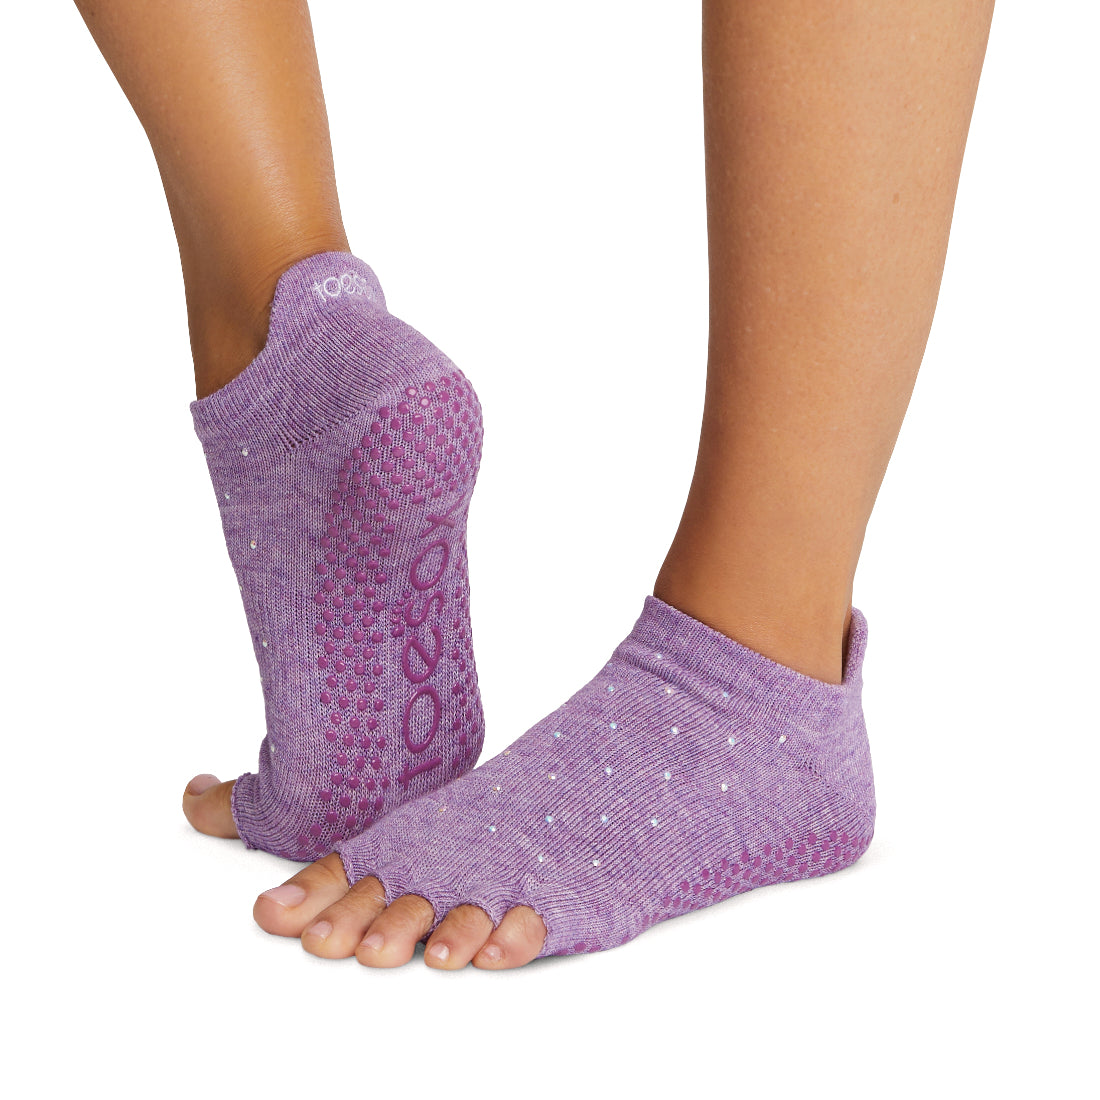 Half Toe Low Rise in Bon Voyage Grip Socks - ToeSox - Mad-HQ